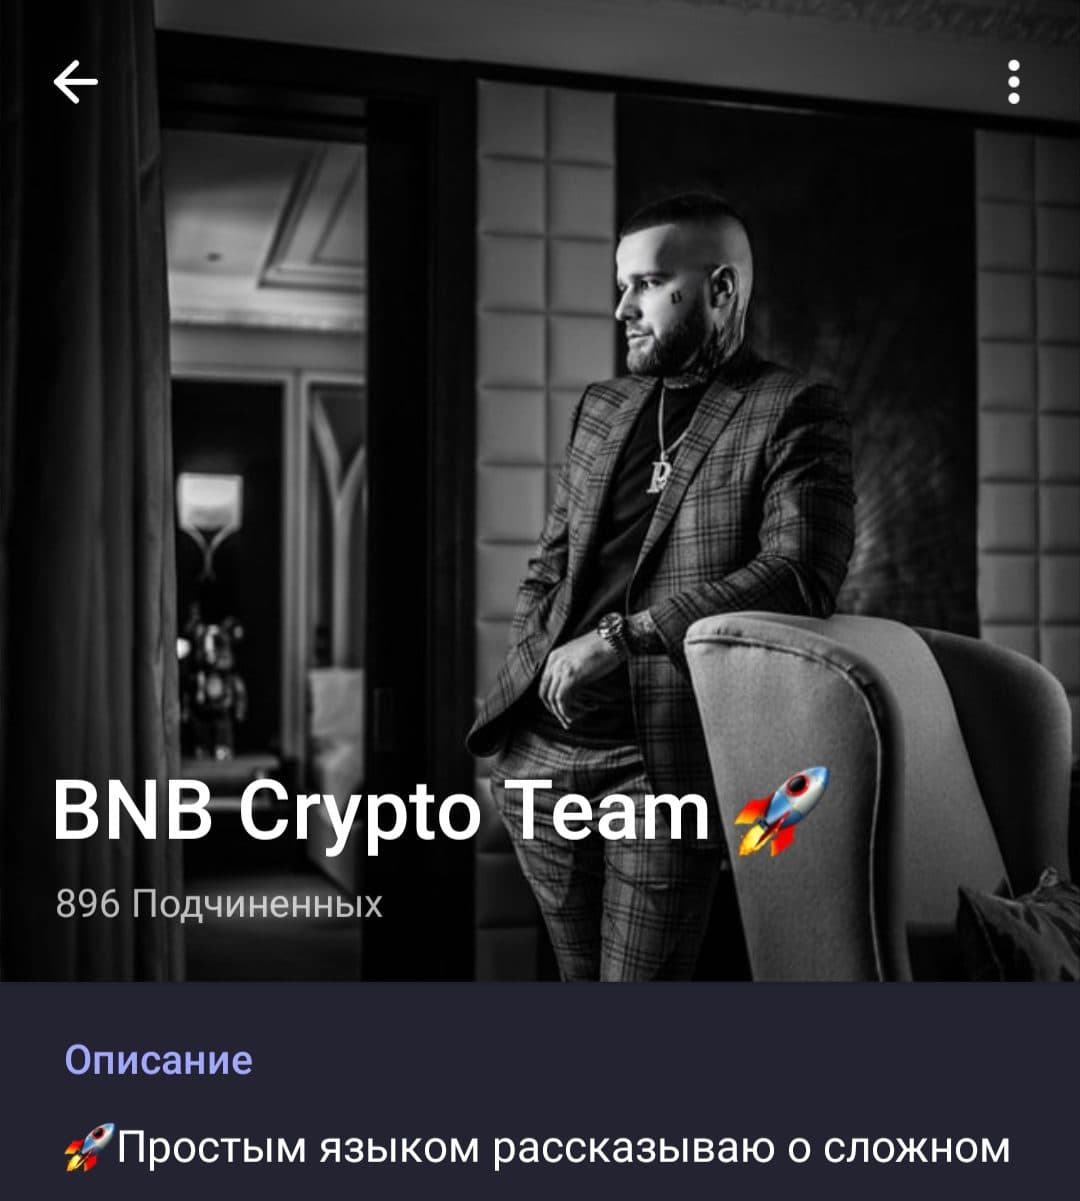 BNB Crypto Team telegram